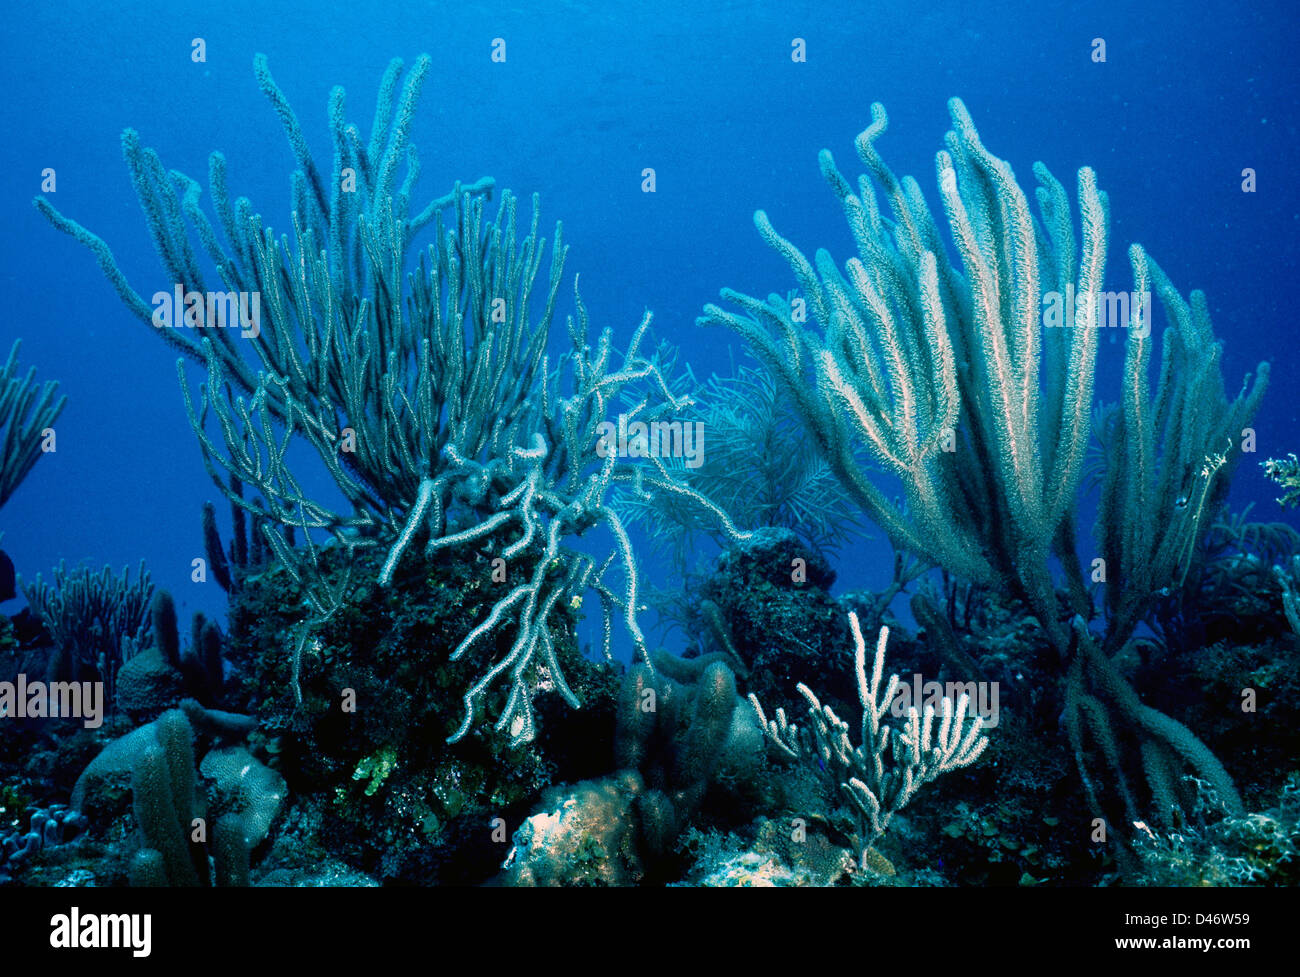 Knobby Sea rod, Eunicea sp., fente géant Sea Rod interstitielle, Plexaurella nutans, Gorgoniaceae, Octocoral. Cuba, mer des Caraïbes Banque D'Images